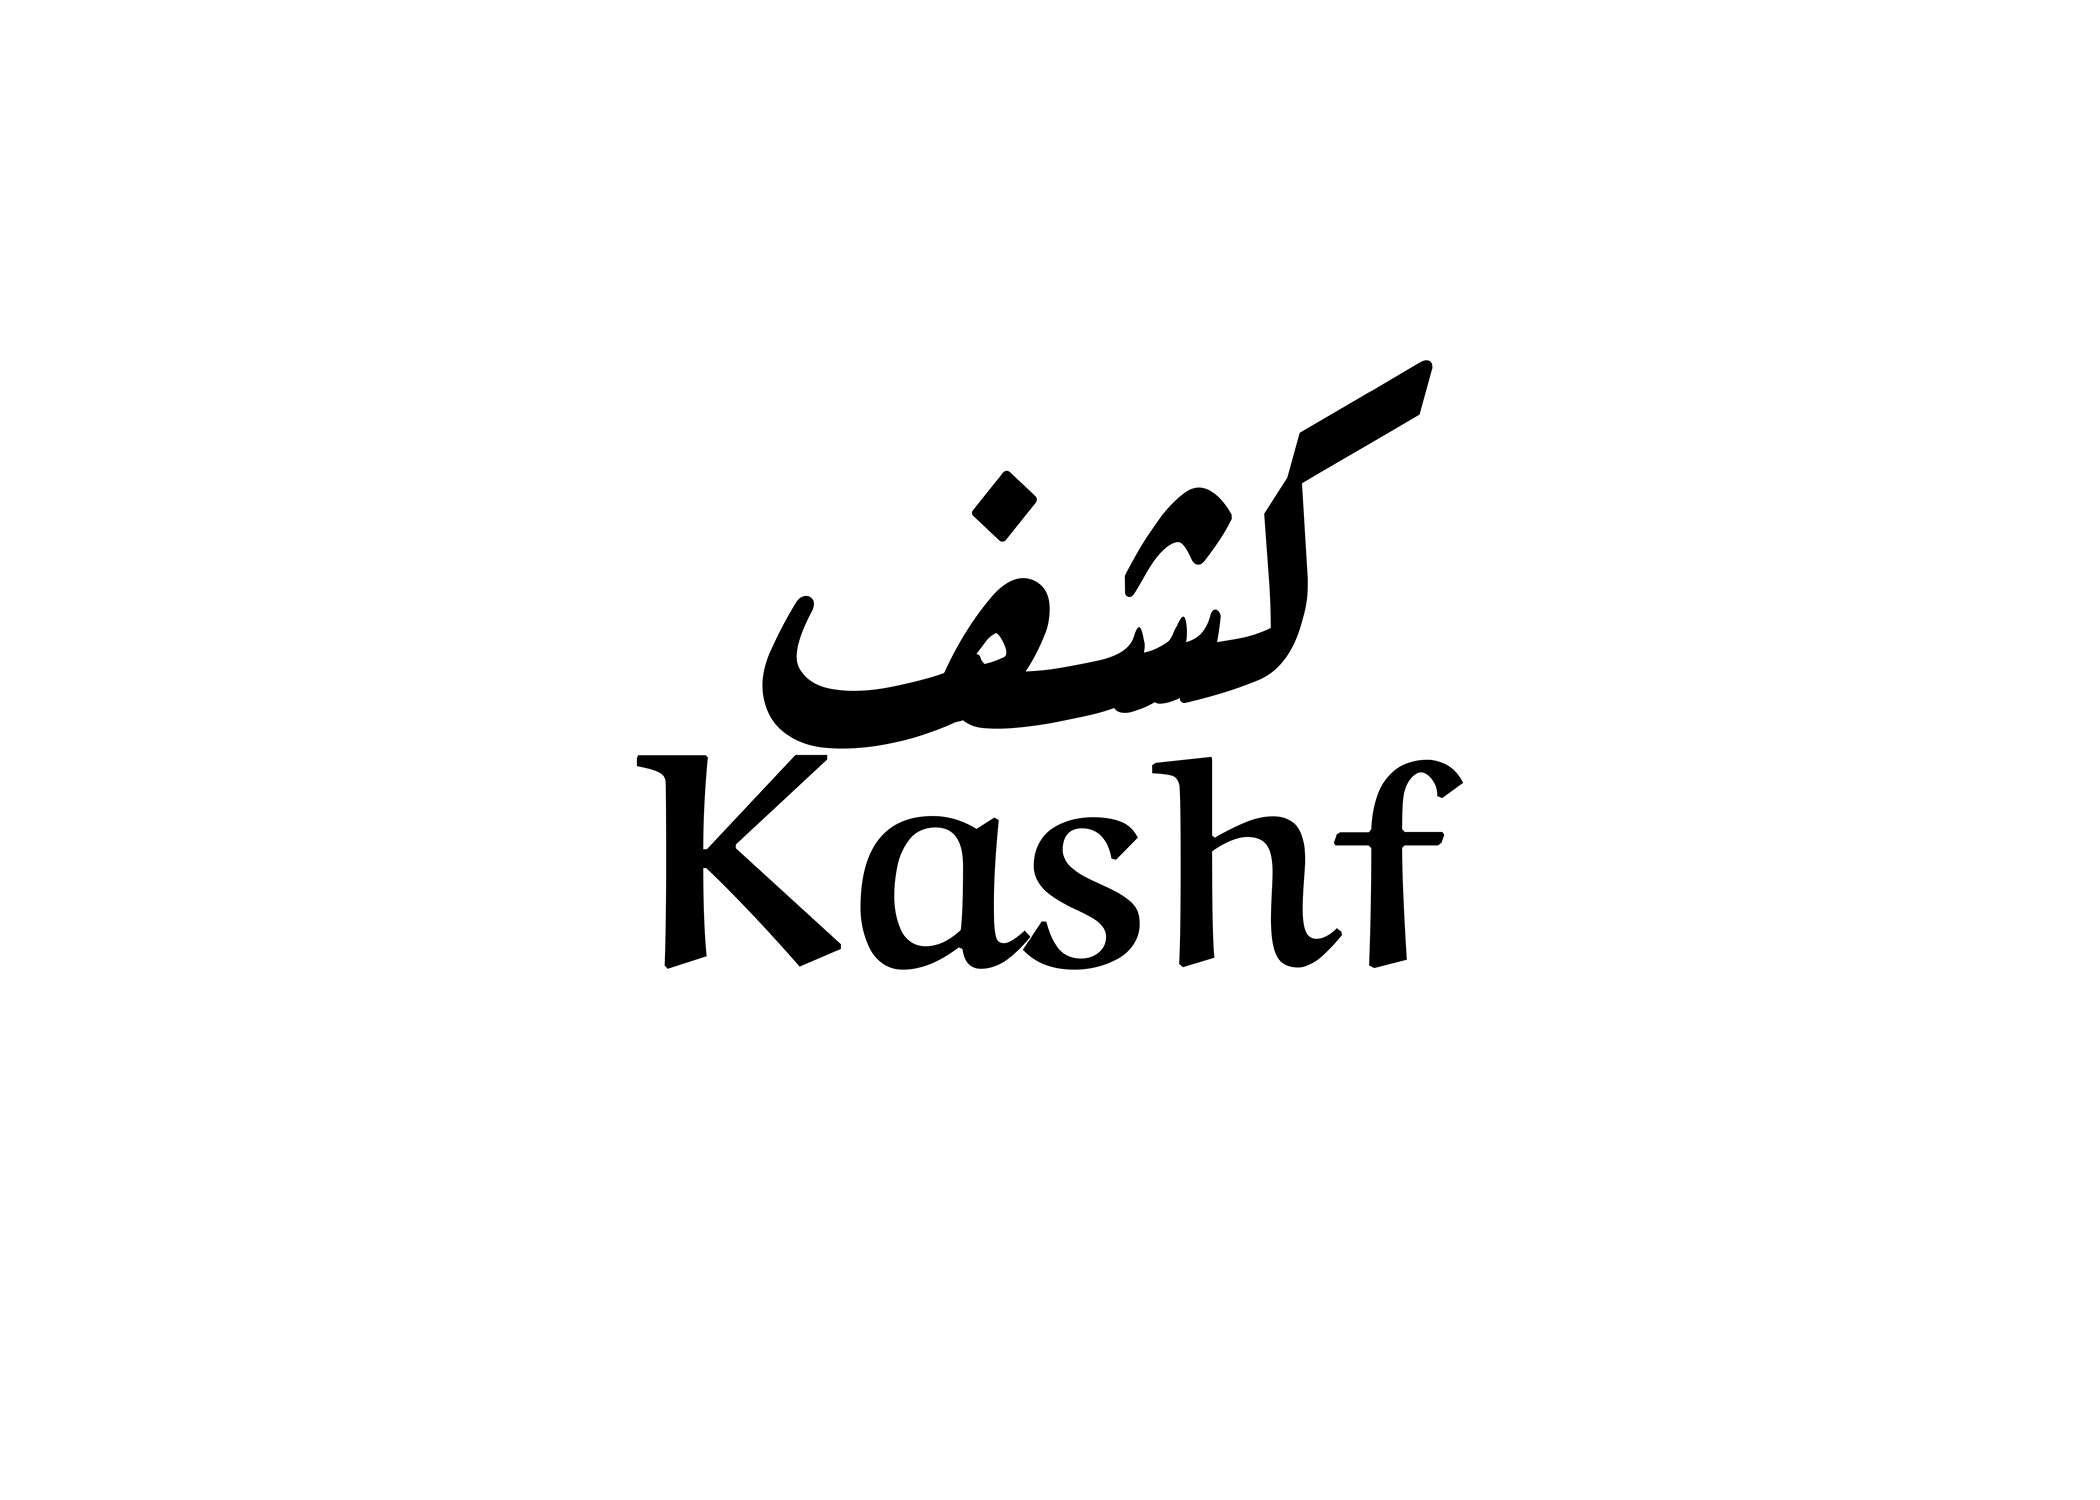 ARIJ Logo